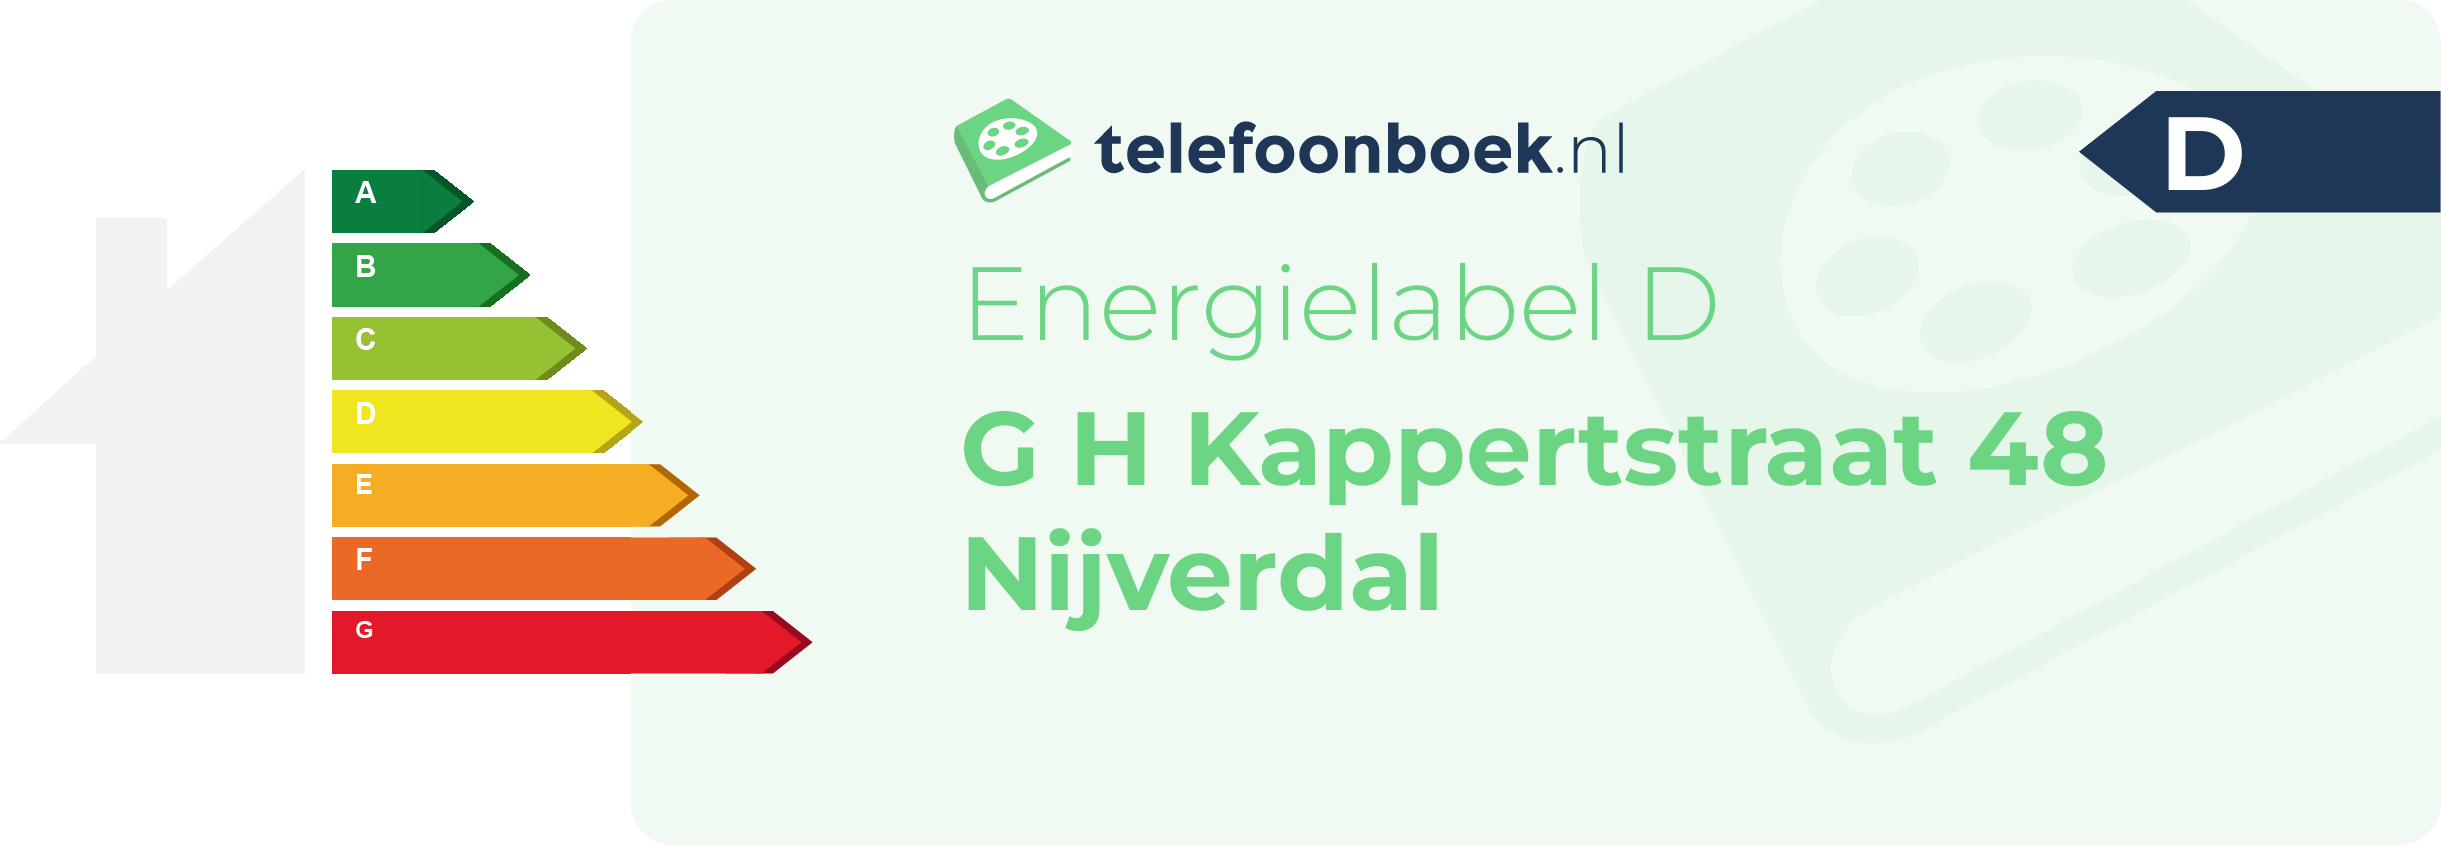 Energielabel G H Kappertstraat 48 Nijverdal